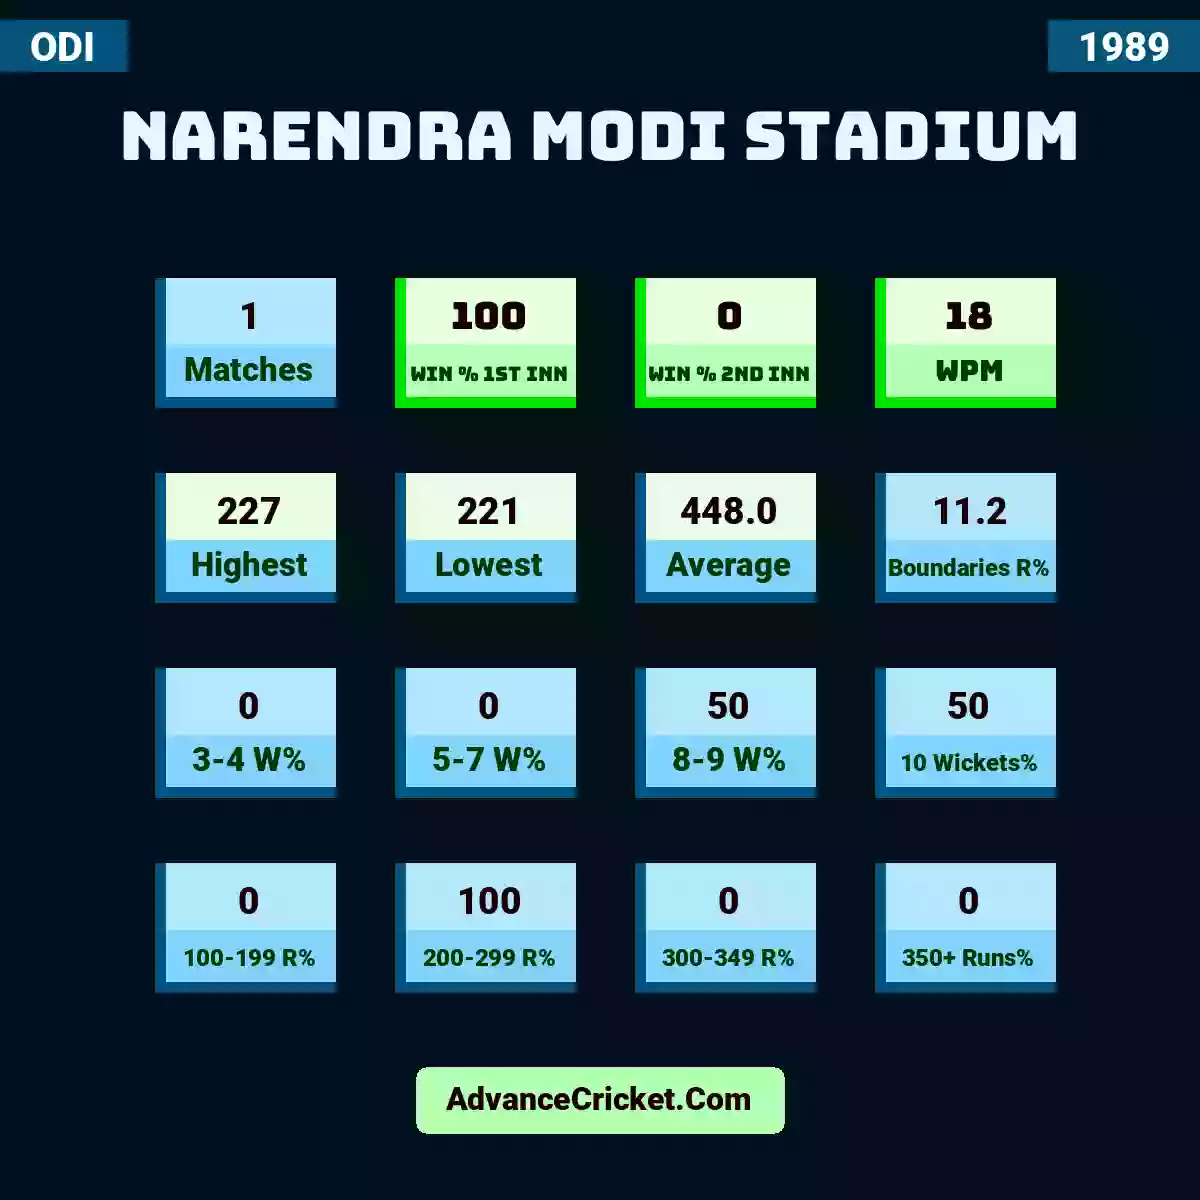 Image showing Narendra Modi Stadium with Matches: 1, Win % 1st Inn: 100, Win % 2nd Inn: 0, WPM: 18, Highest: 227, Lowest: 221, Average: 448.0, Boundaries R%: 11.2, 3-4 W%: 0, 5-7 W%: 0, 8-9 W%: 50, 10 Wickets%: 50, 100-199 R%: 0, 200-299 R%: 100, 300-349 R%: 0, 350+ Runs%: 0.